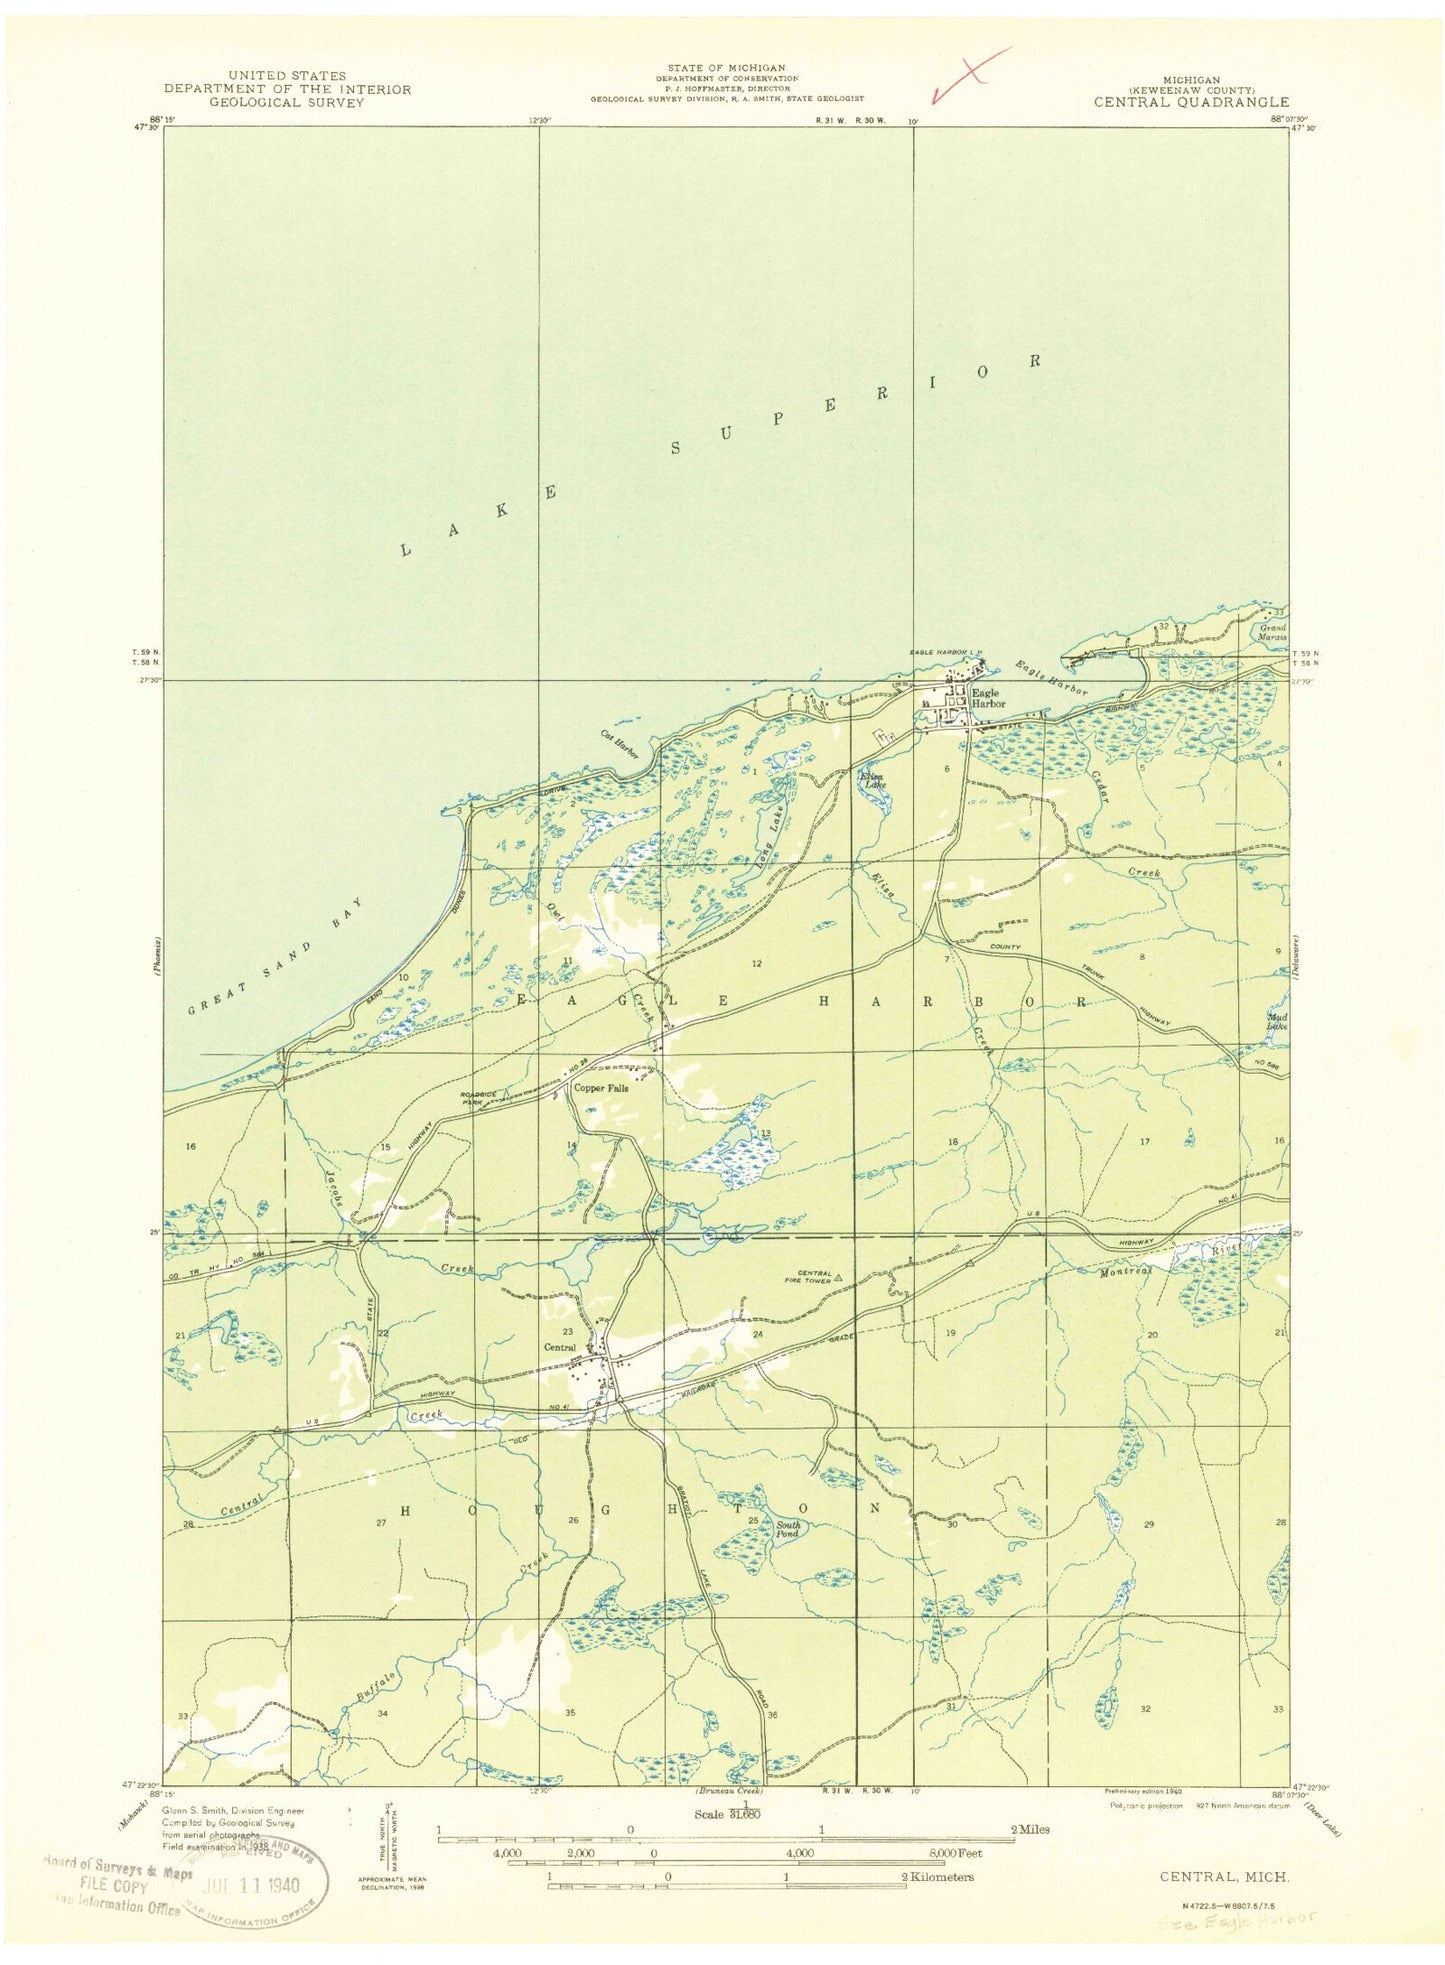 Classic USGS Eagle Harbor Michigan 7.5'x7.5' Topo Map Image